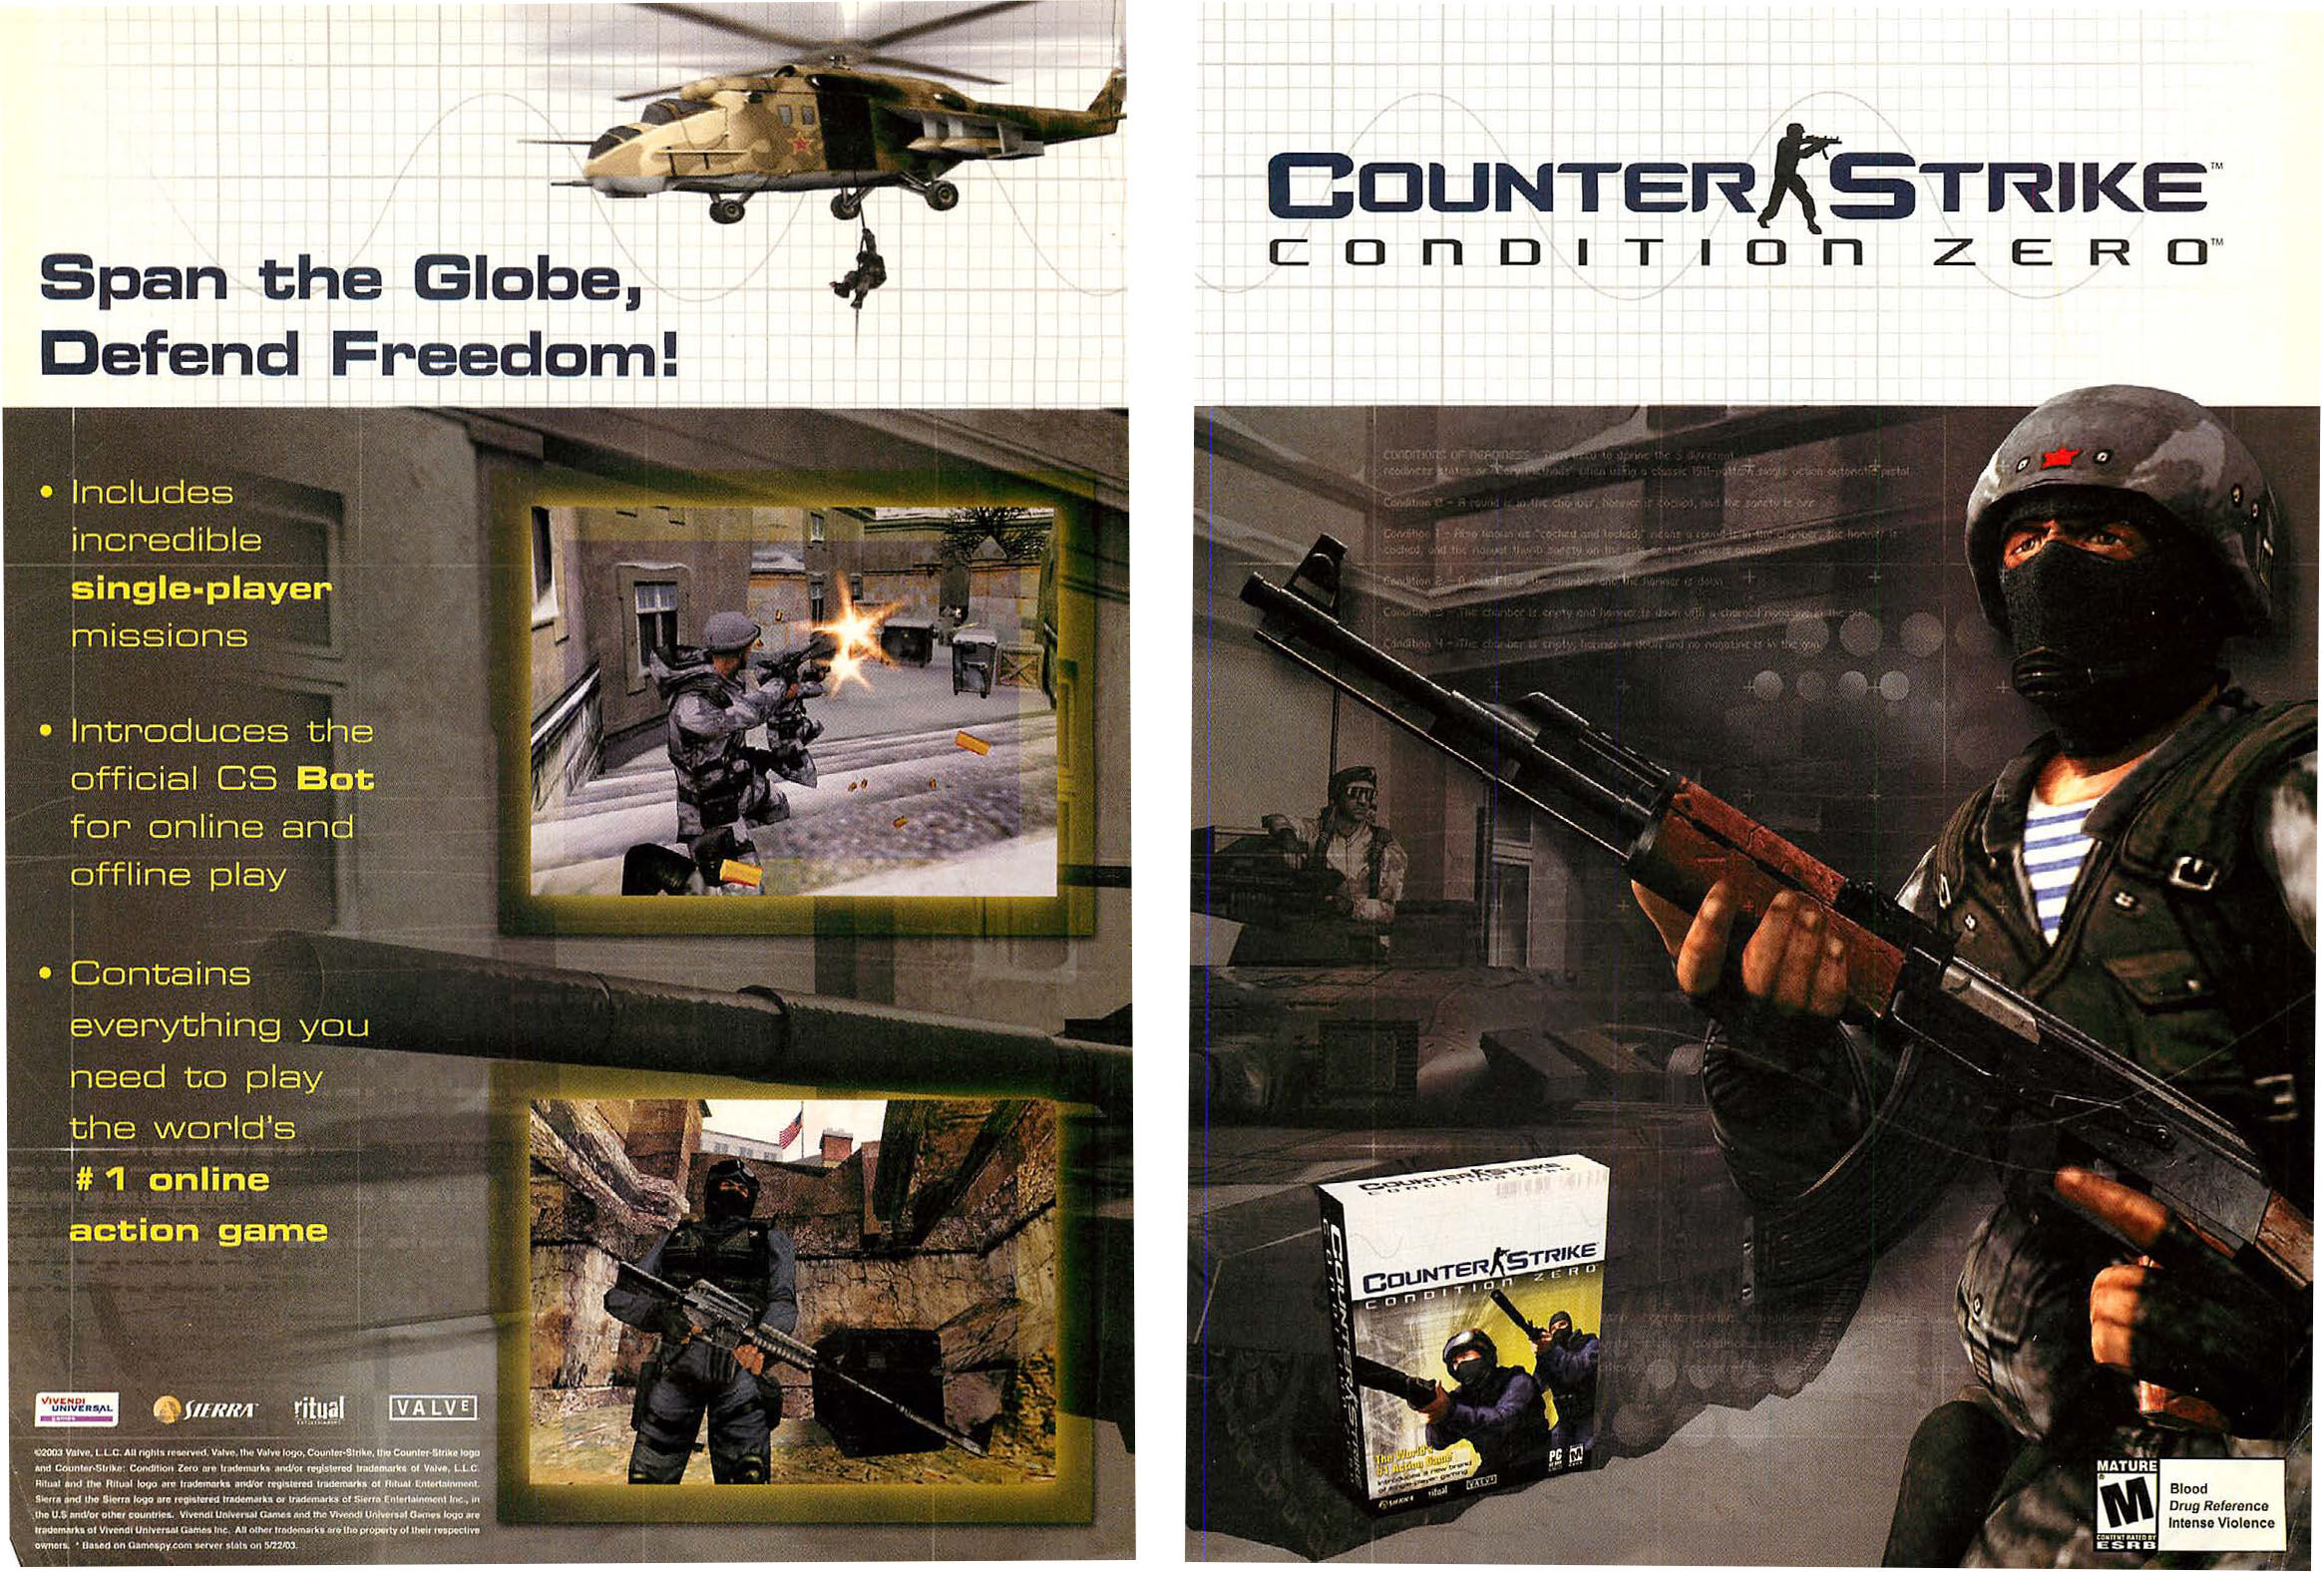 Authentic PC game: Counterstrike - Condition Zero